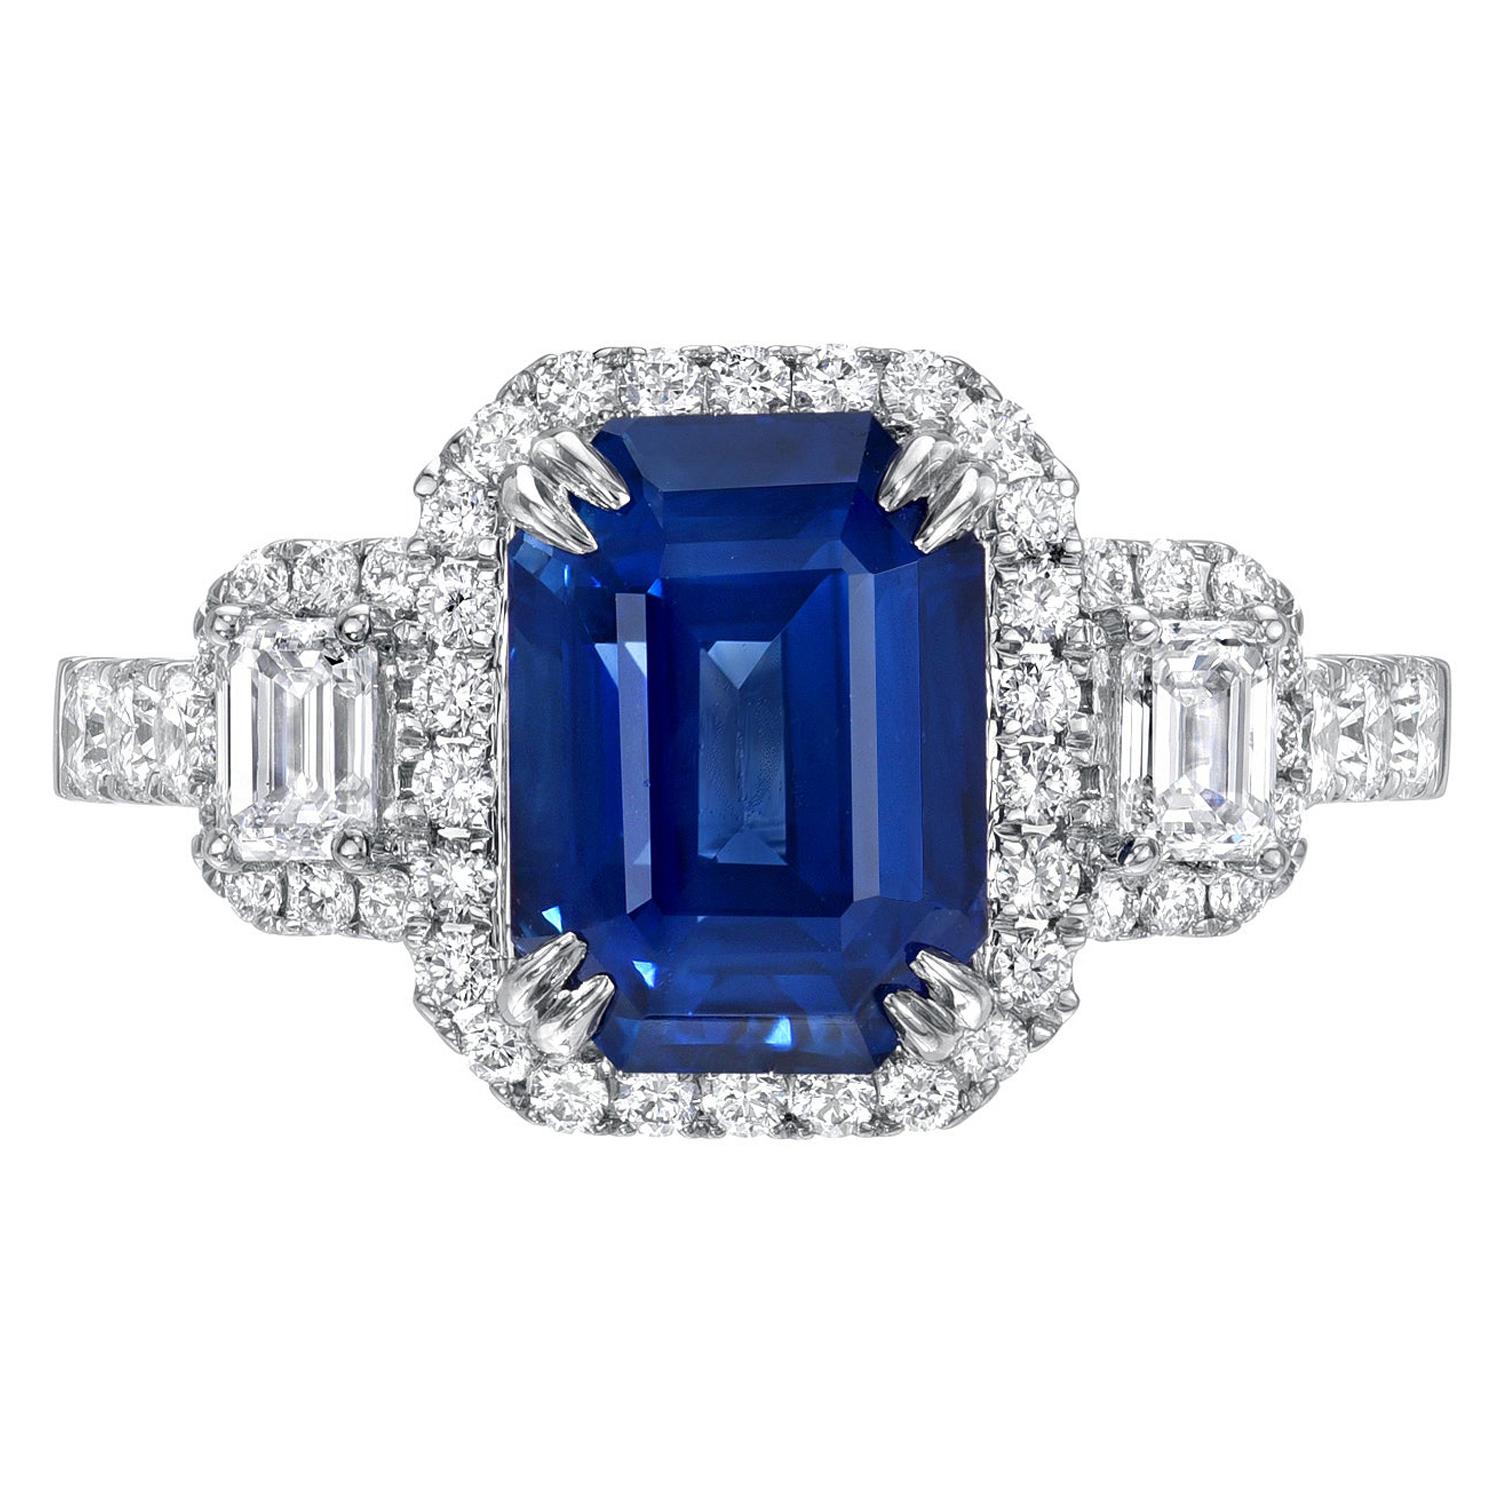 Blue Sapphire Ring 3.58 Carat Emerald Cut